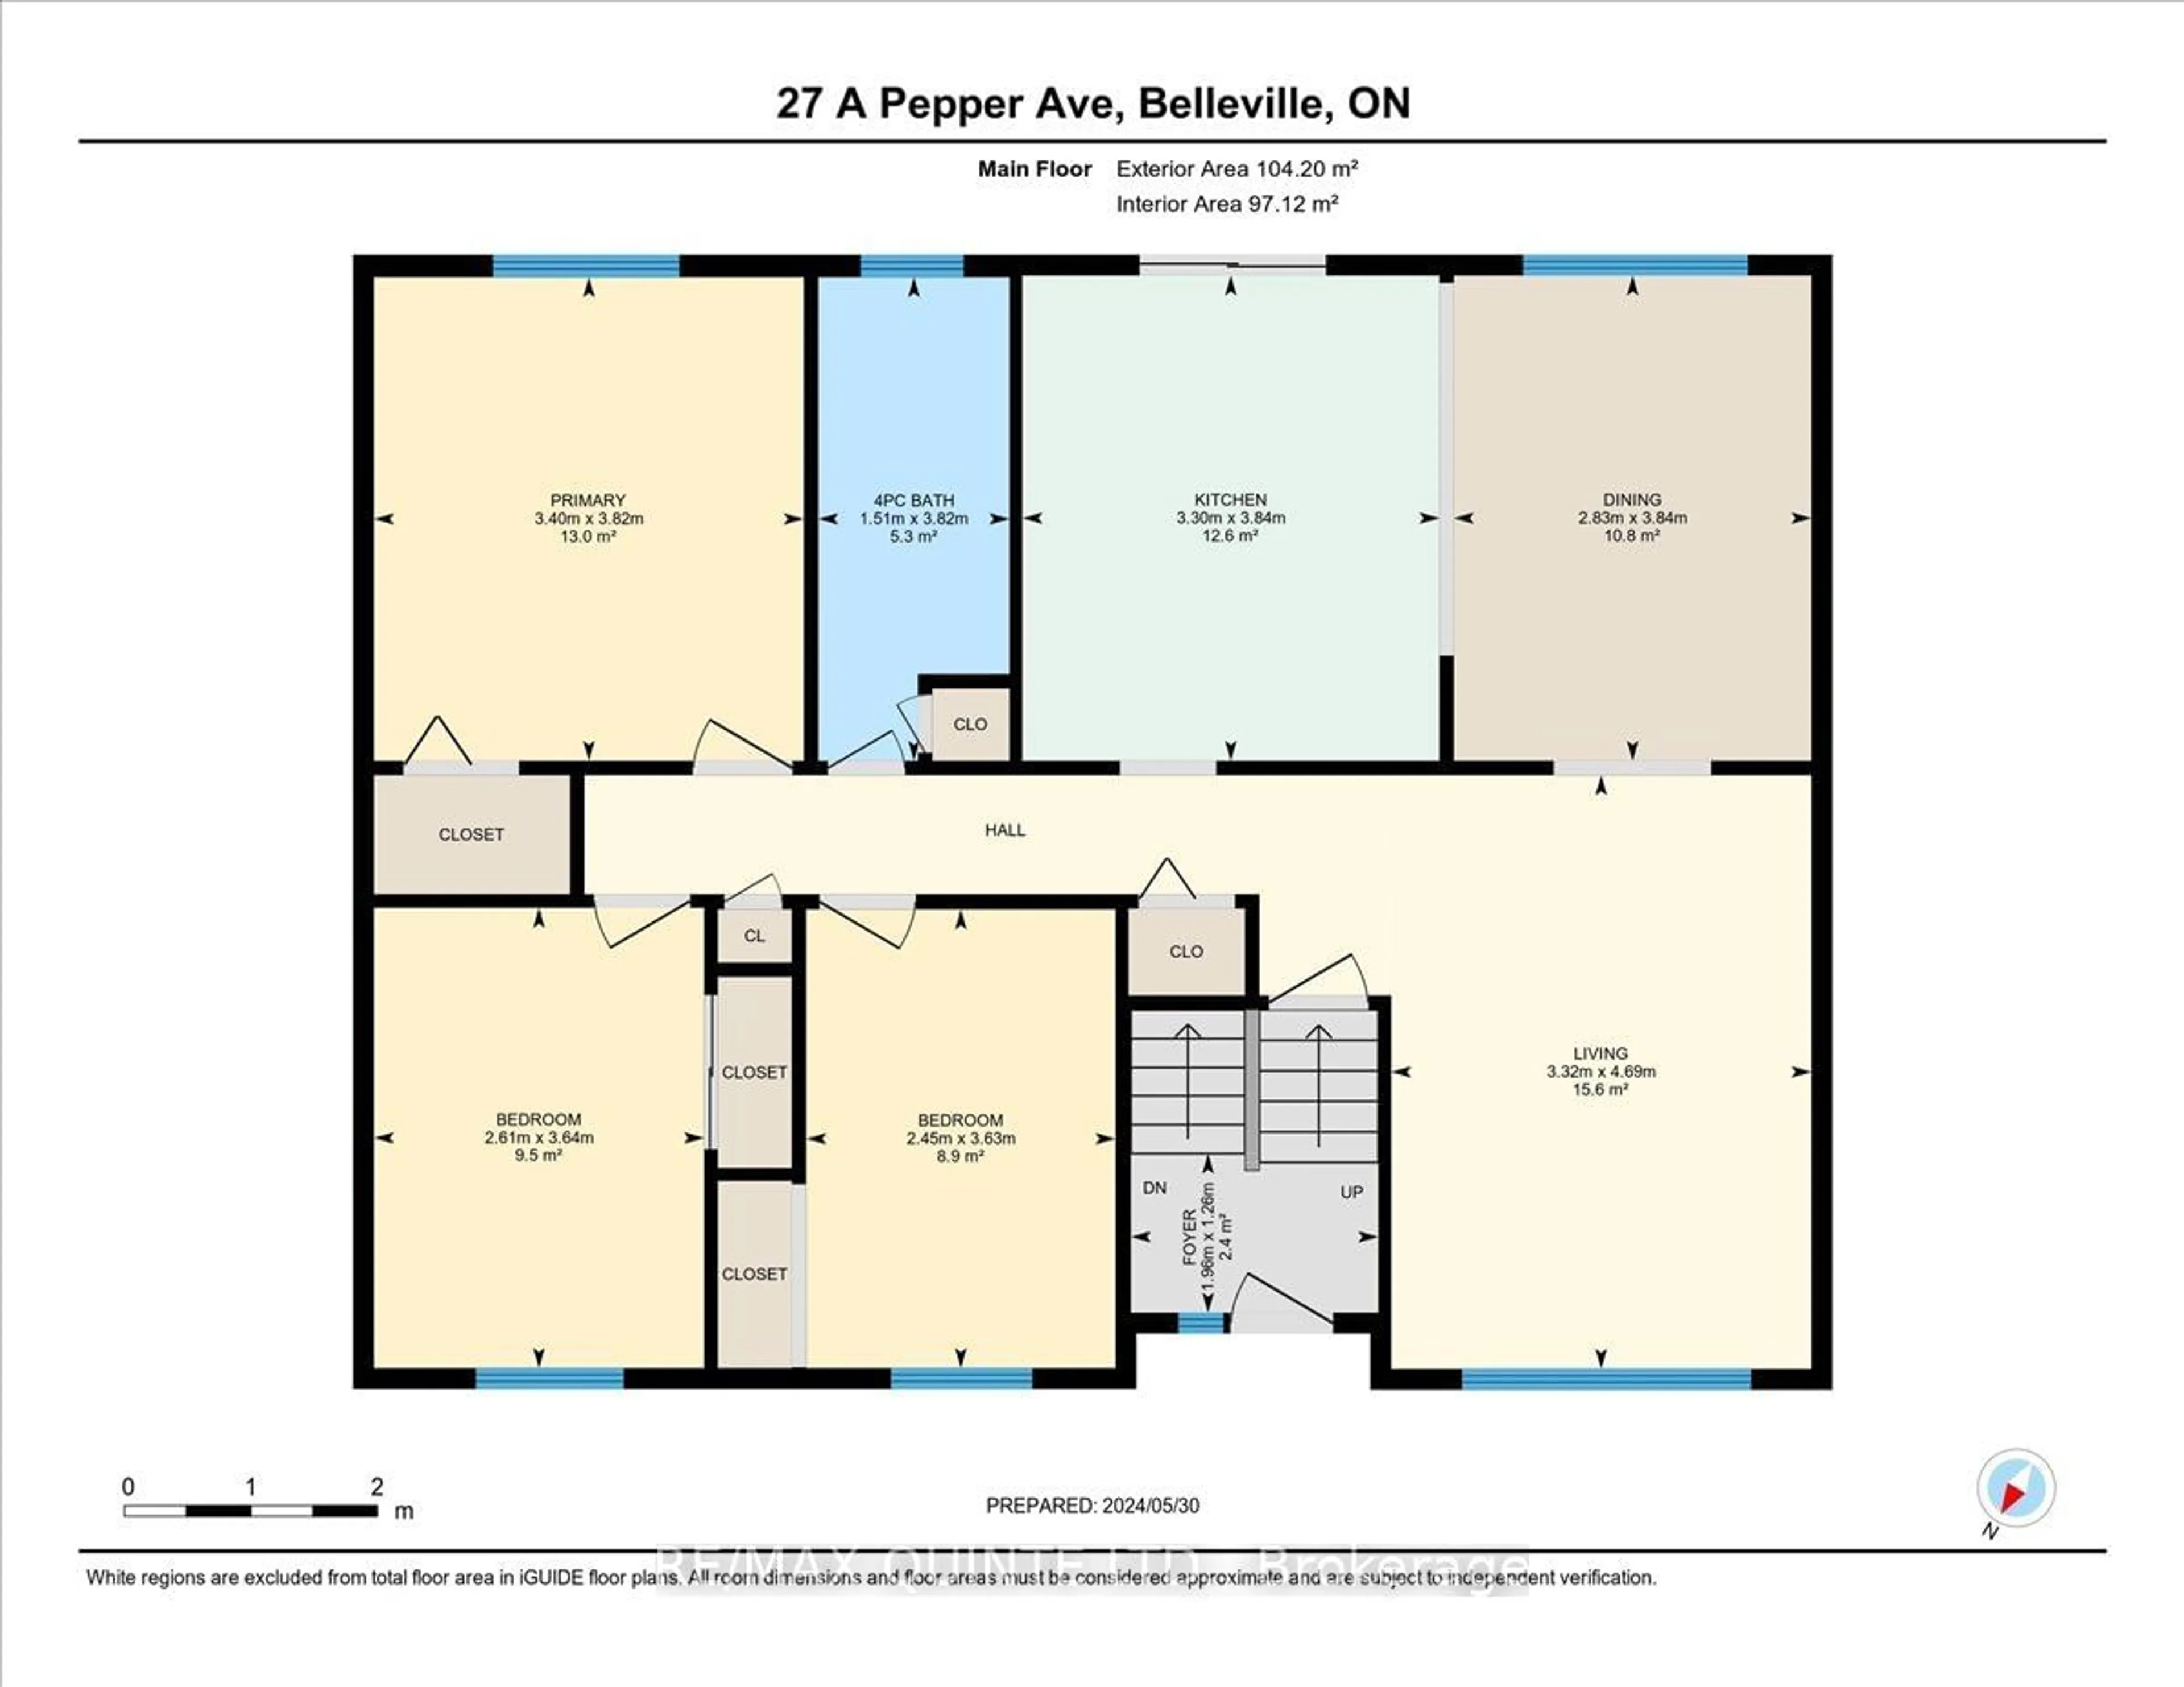 Floor plan for 27A Pepper Ave, Belleville Ontario K8P 4R2